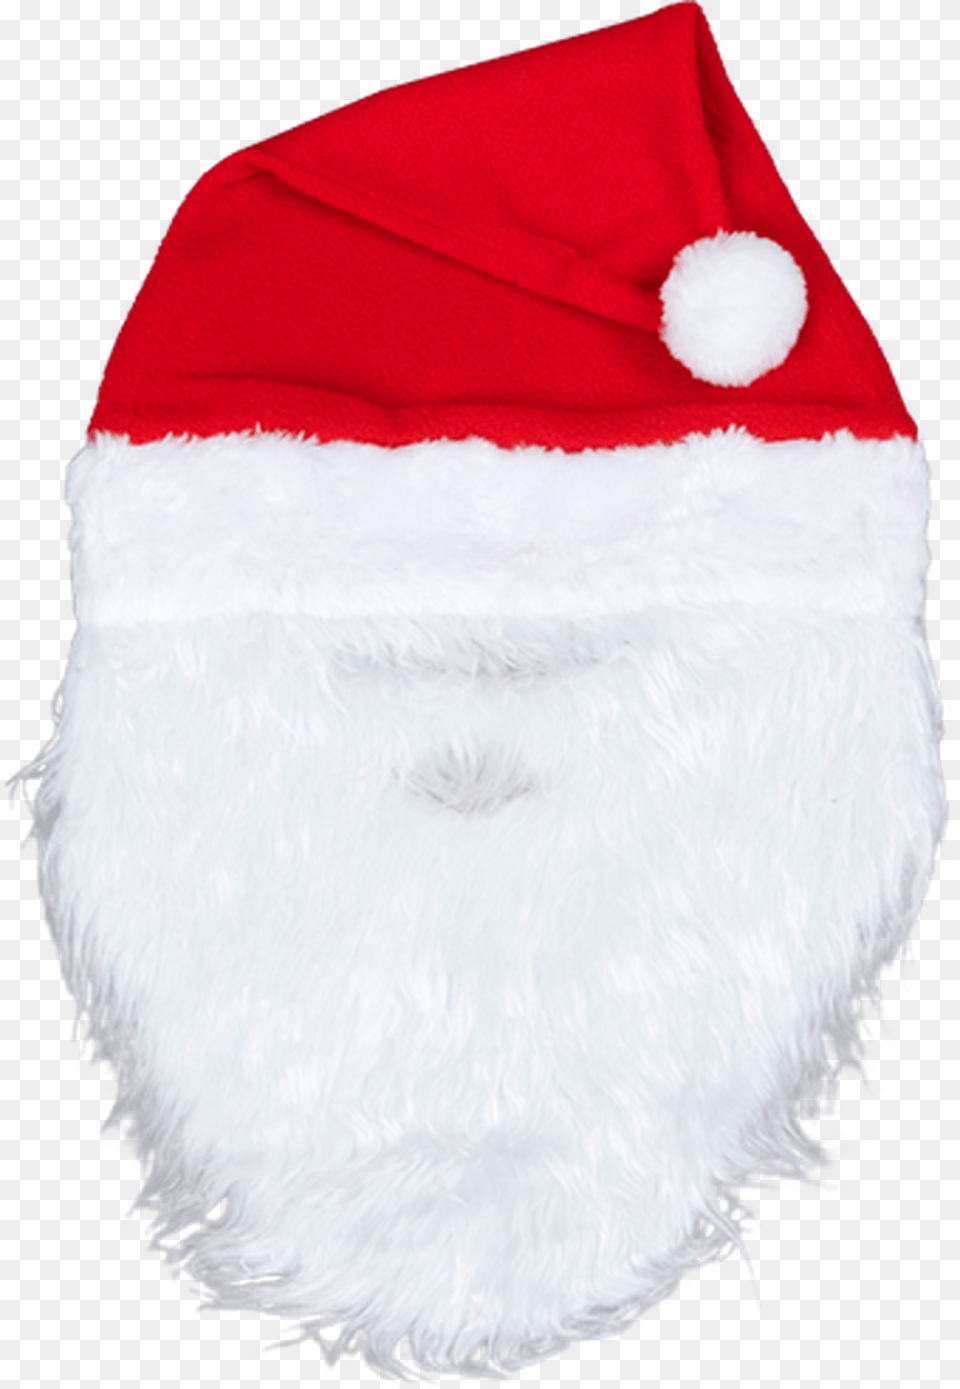 Clip Art Santa Hat And Beard Costume Hat, Clothing, Cap, Accessories, Bag Free Png